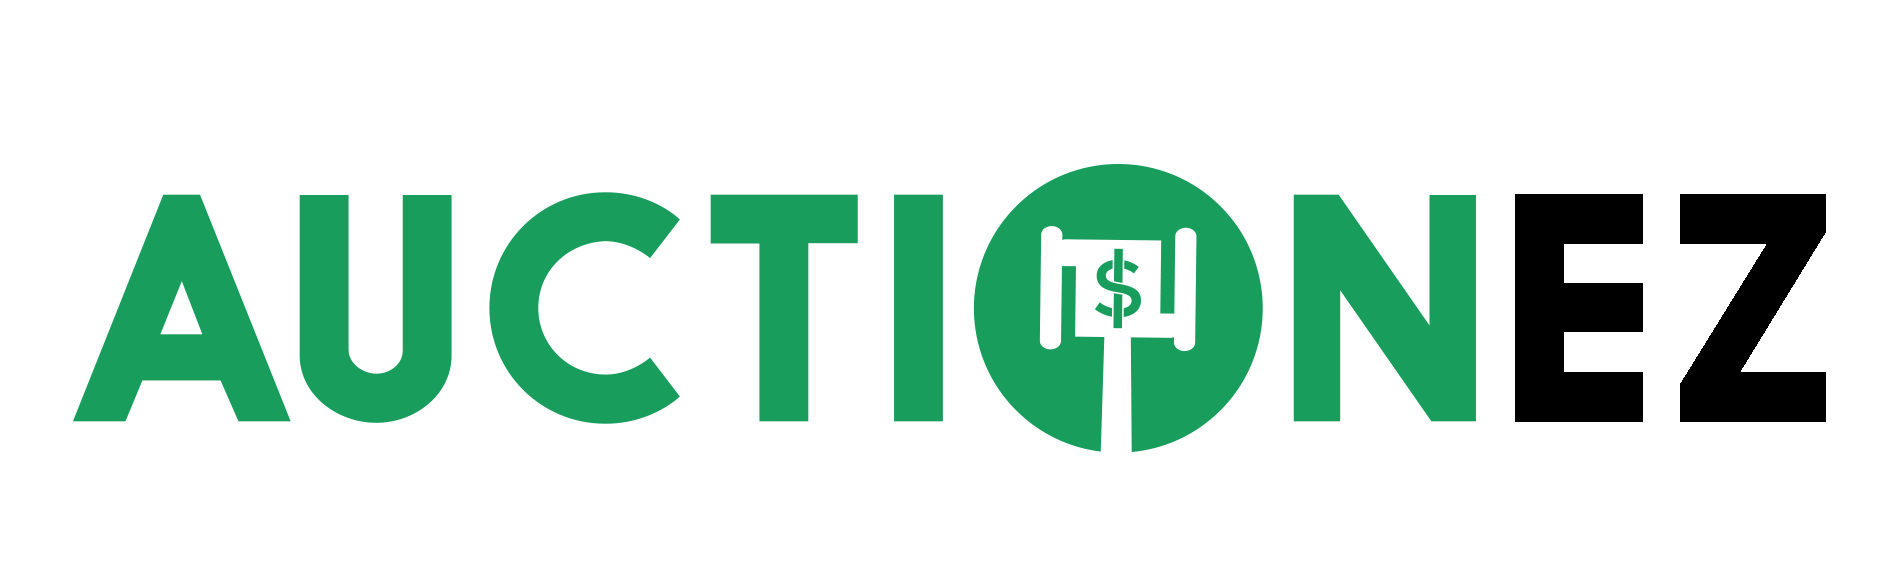 Auction Logo Inverted